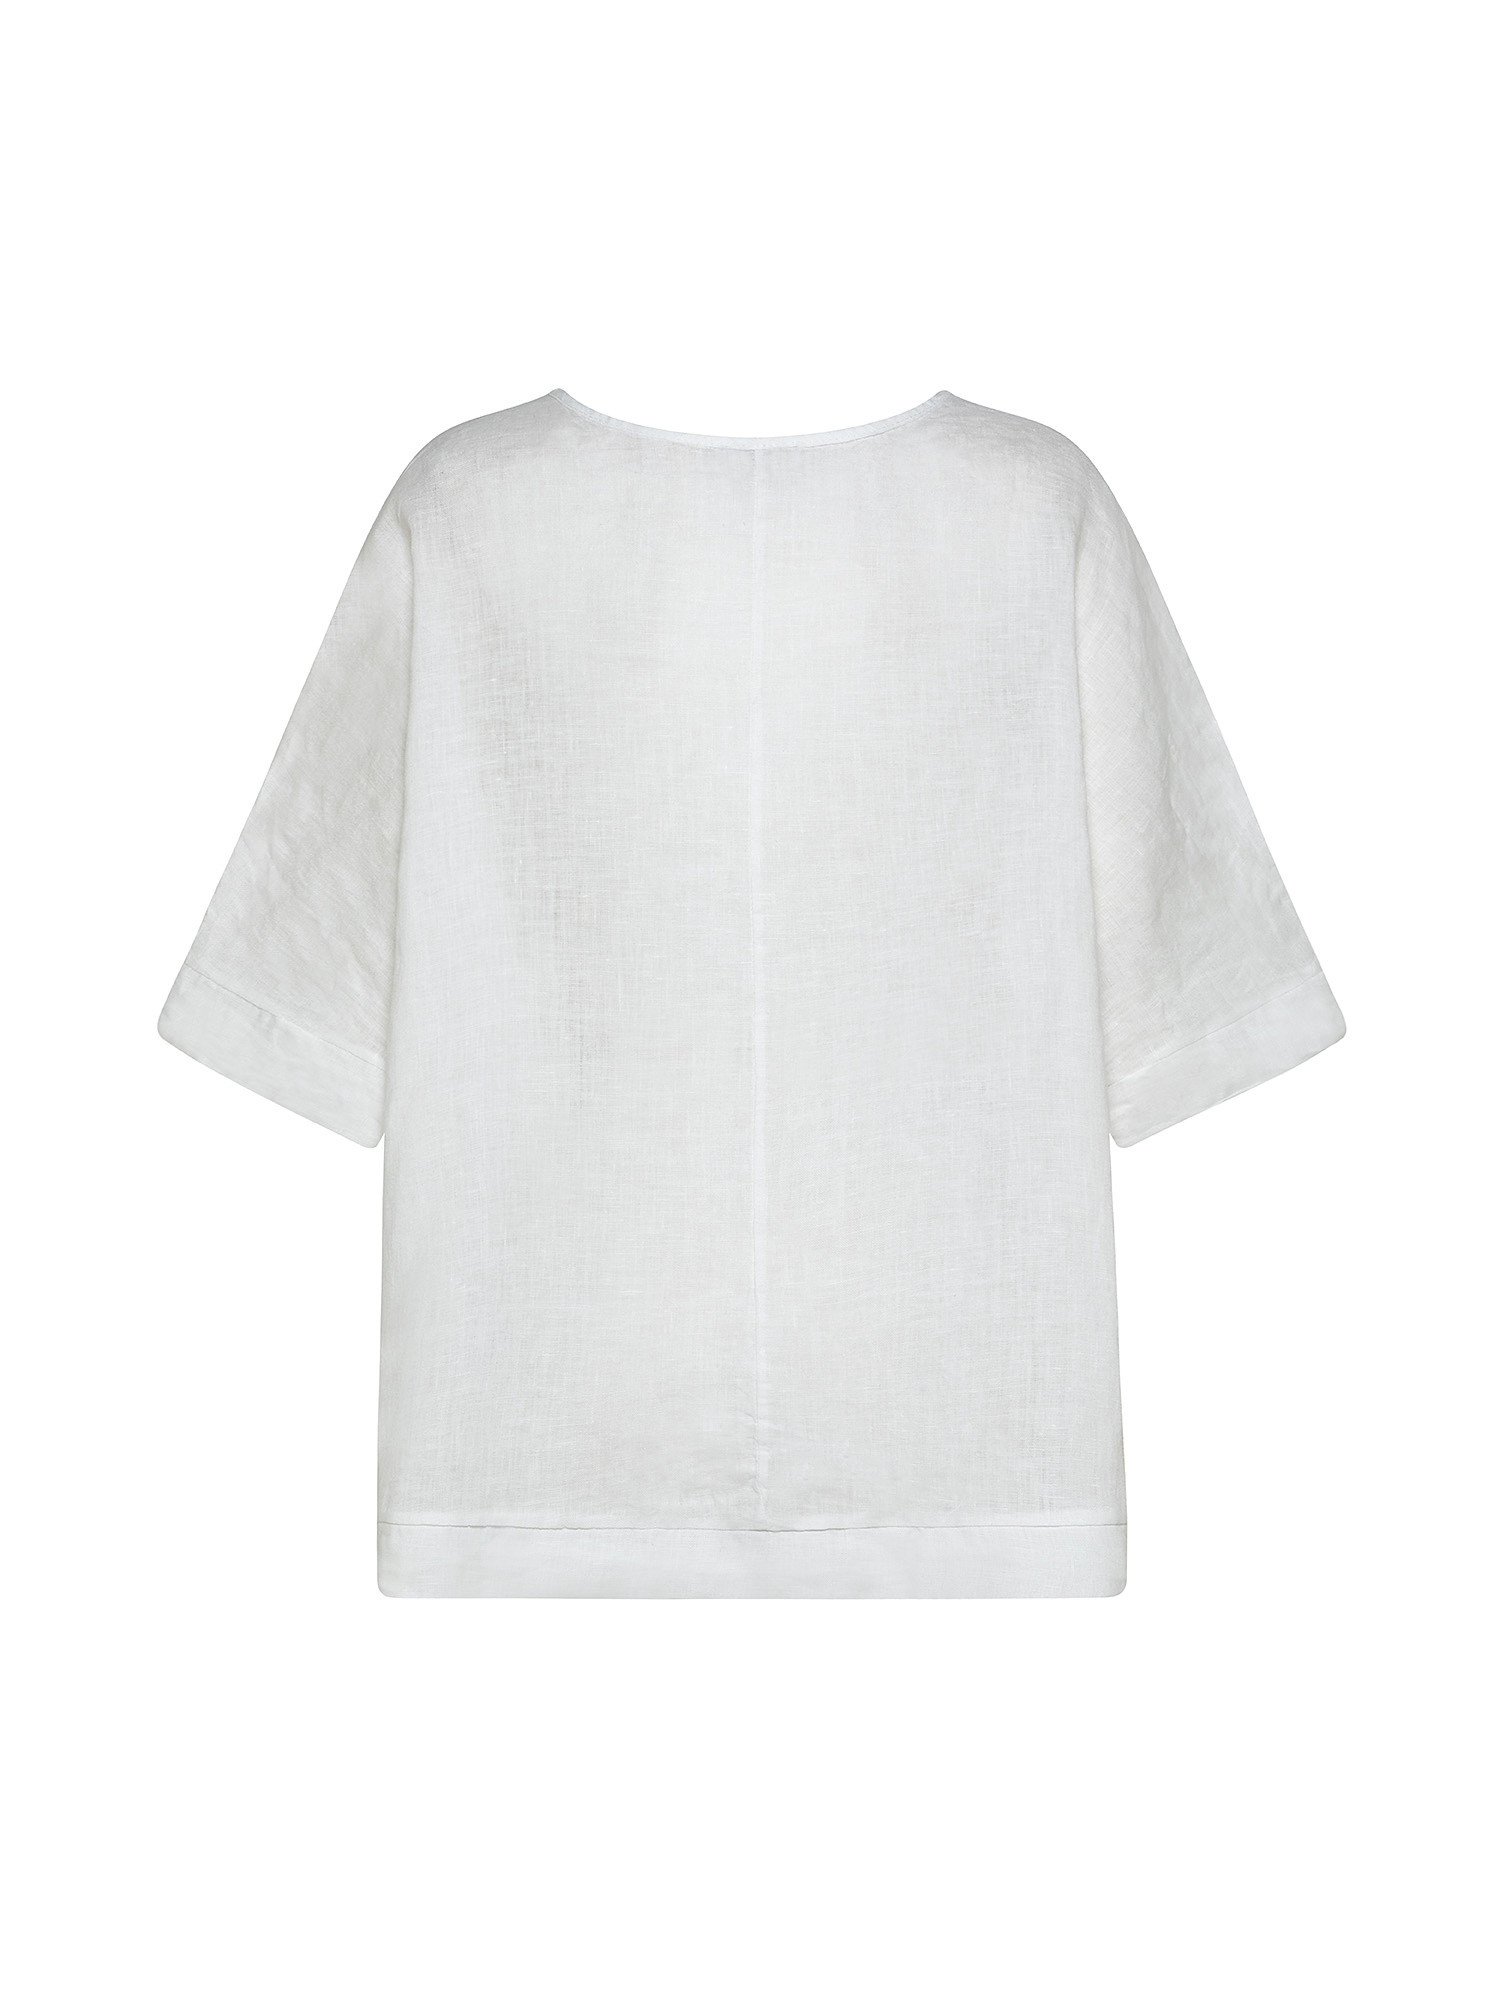 Camicia over puro lino tinta unita, Bianco, large image number 1